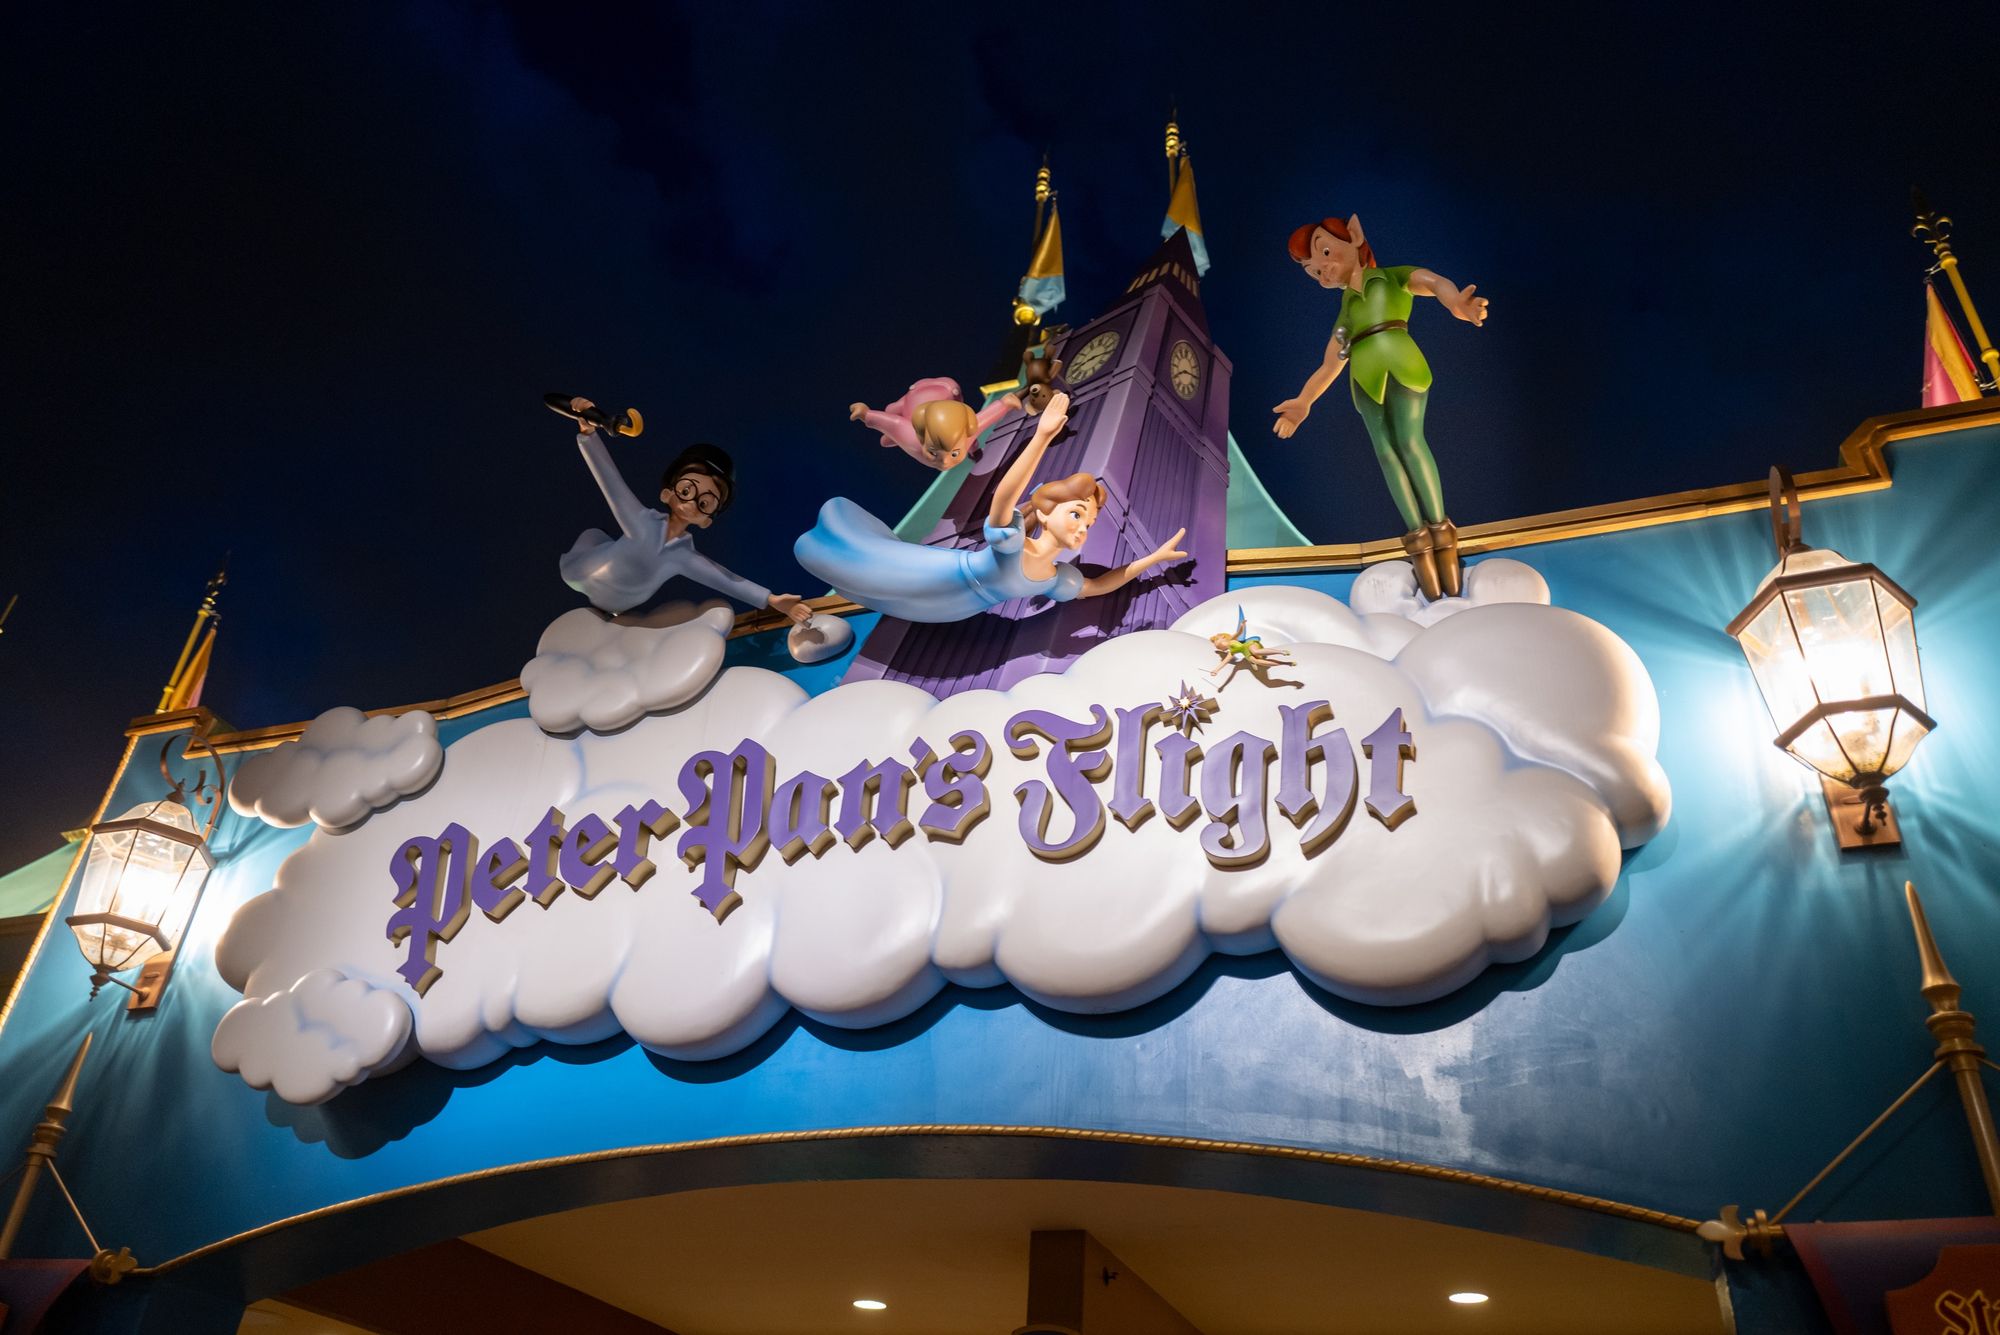 Peter Pan Birthday Theme Centerpiece Decoration